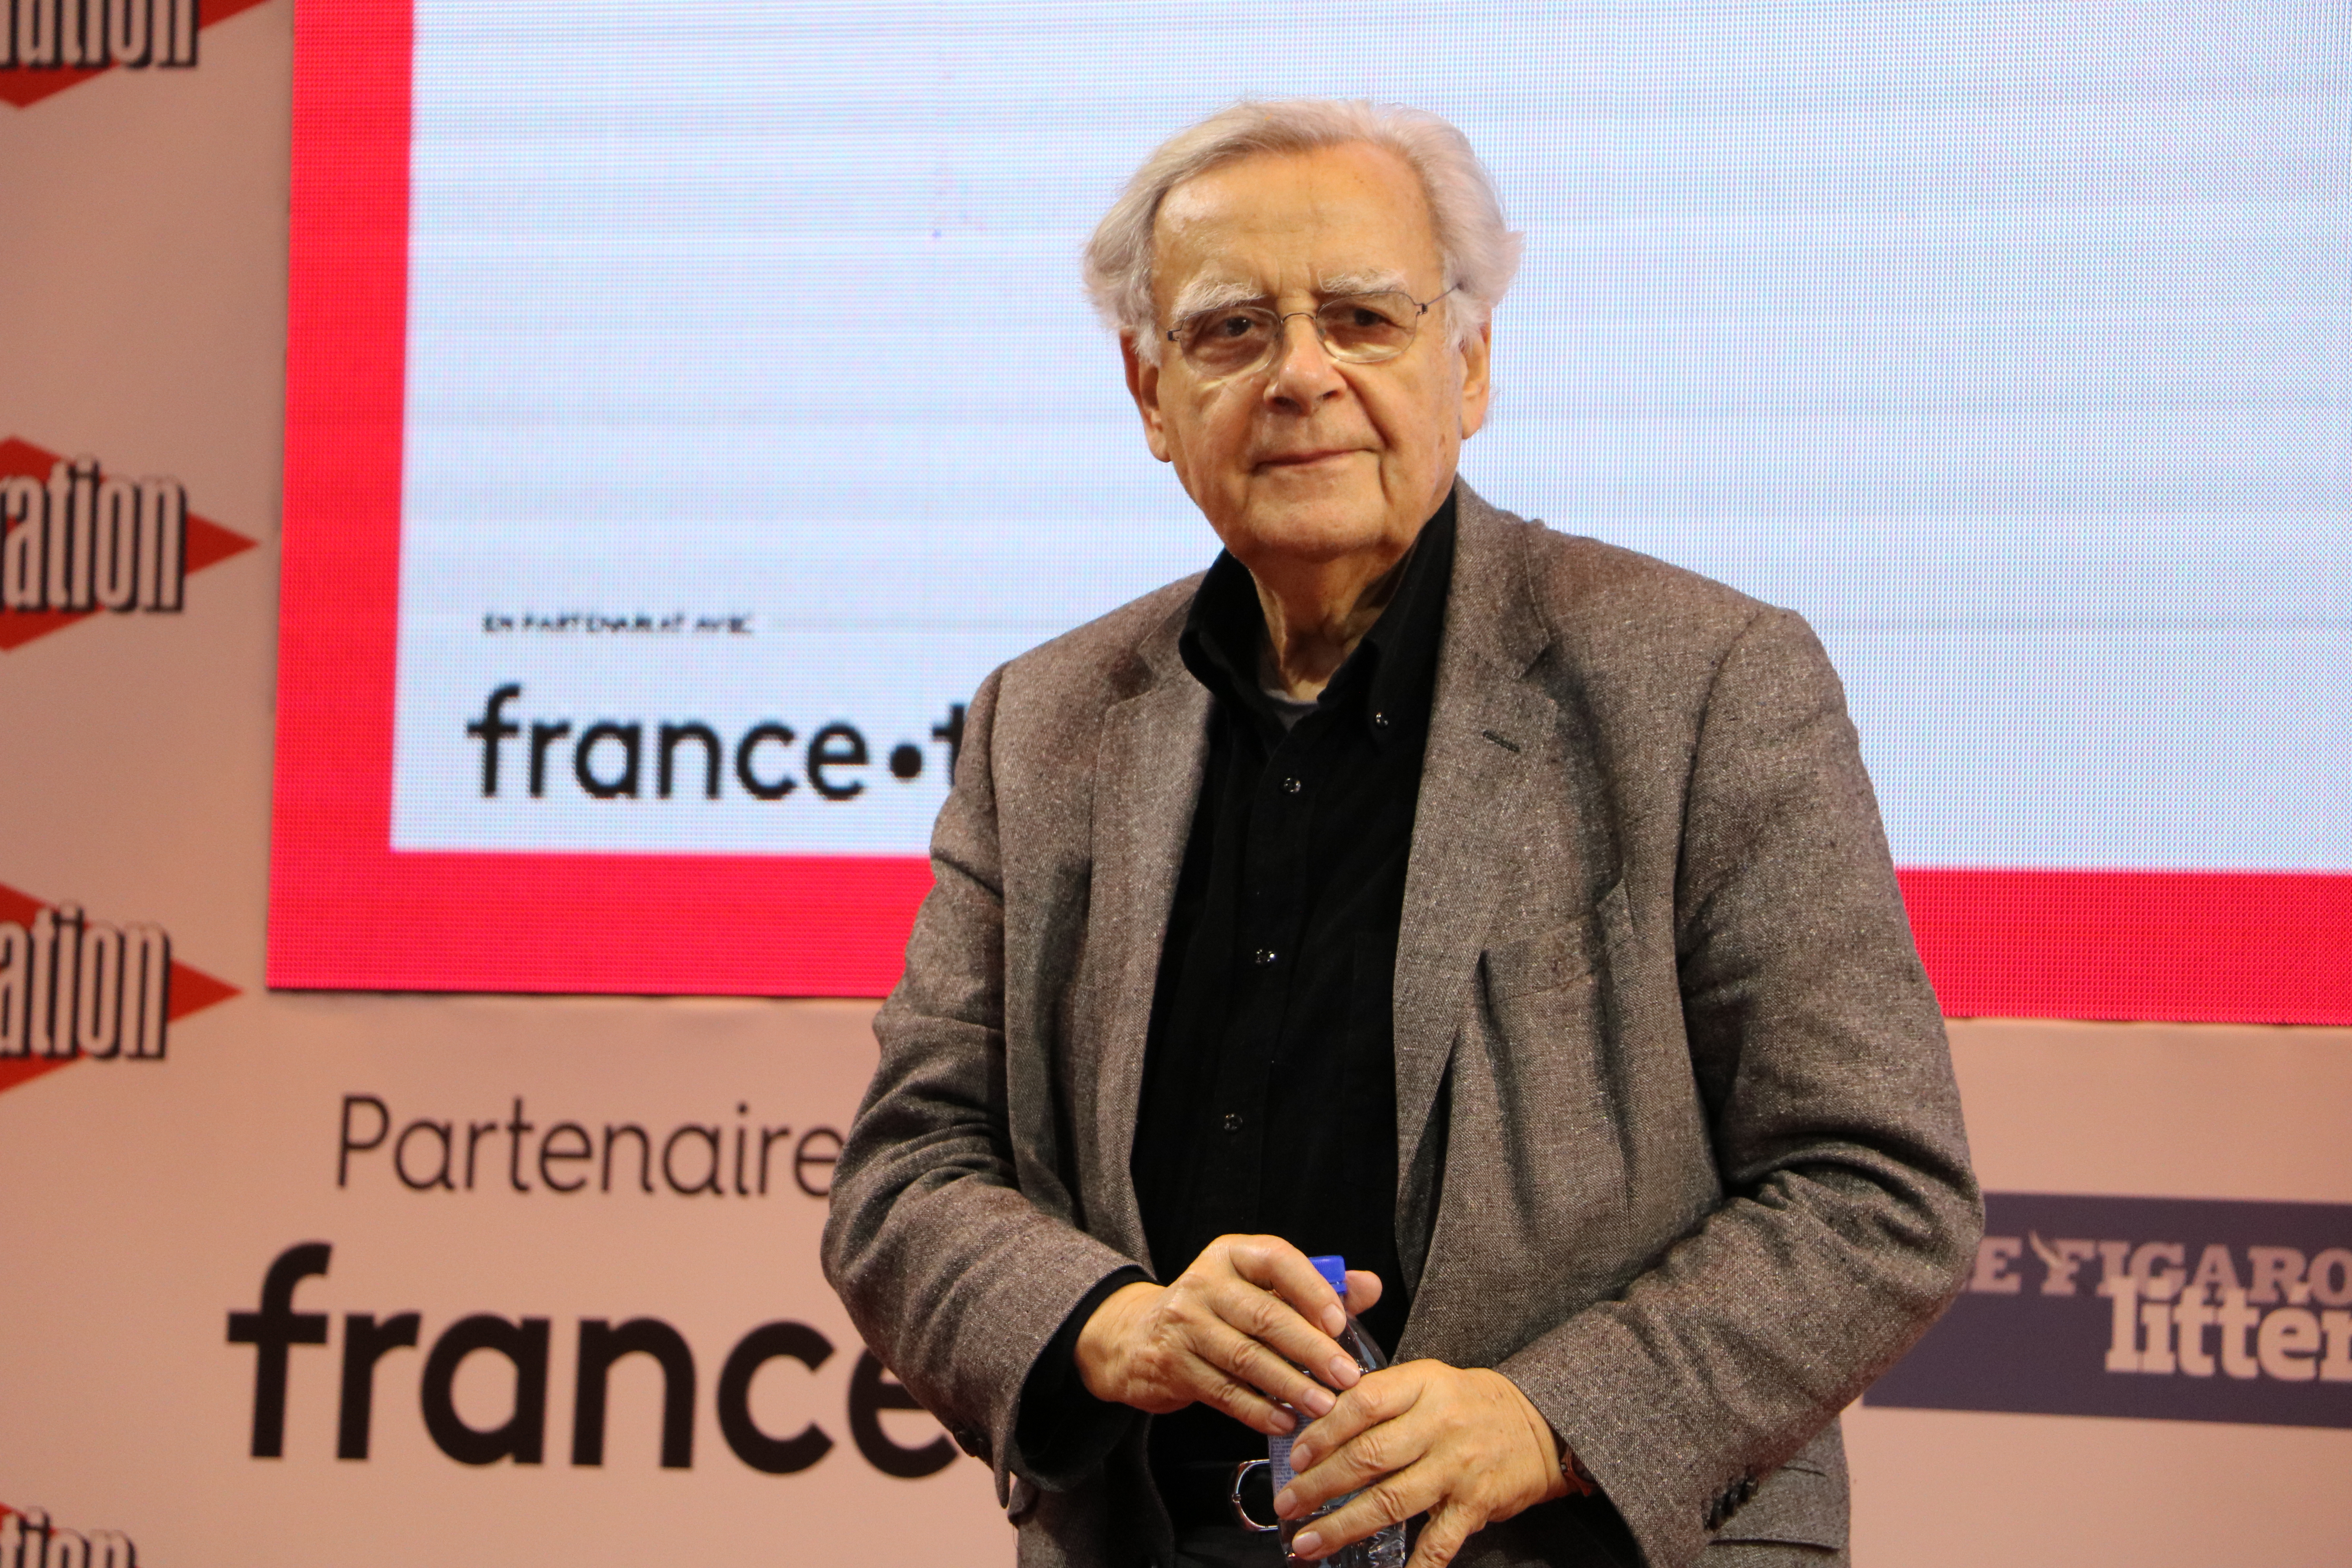 Bernard Pivot au Salon du livre de Paris 2018 | Photo : Wikimedia